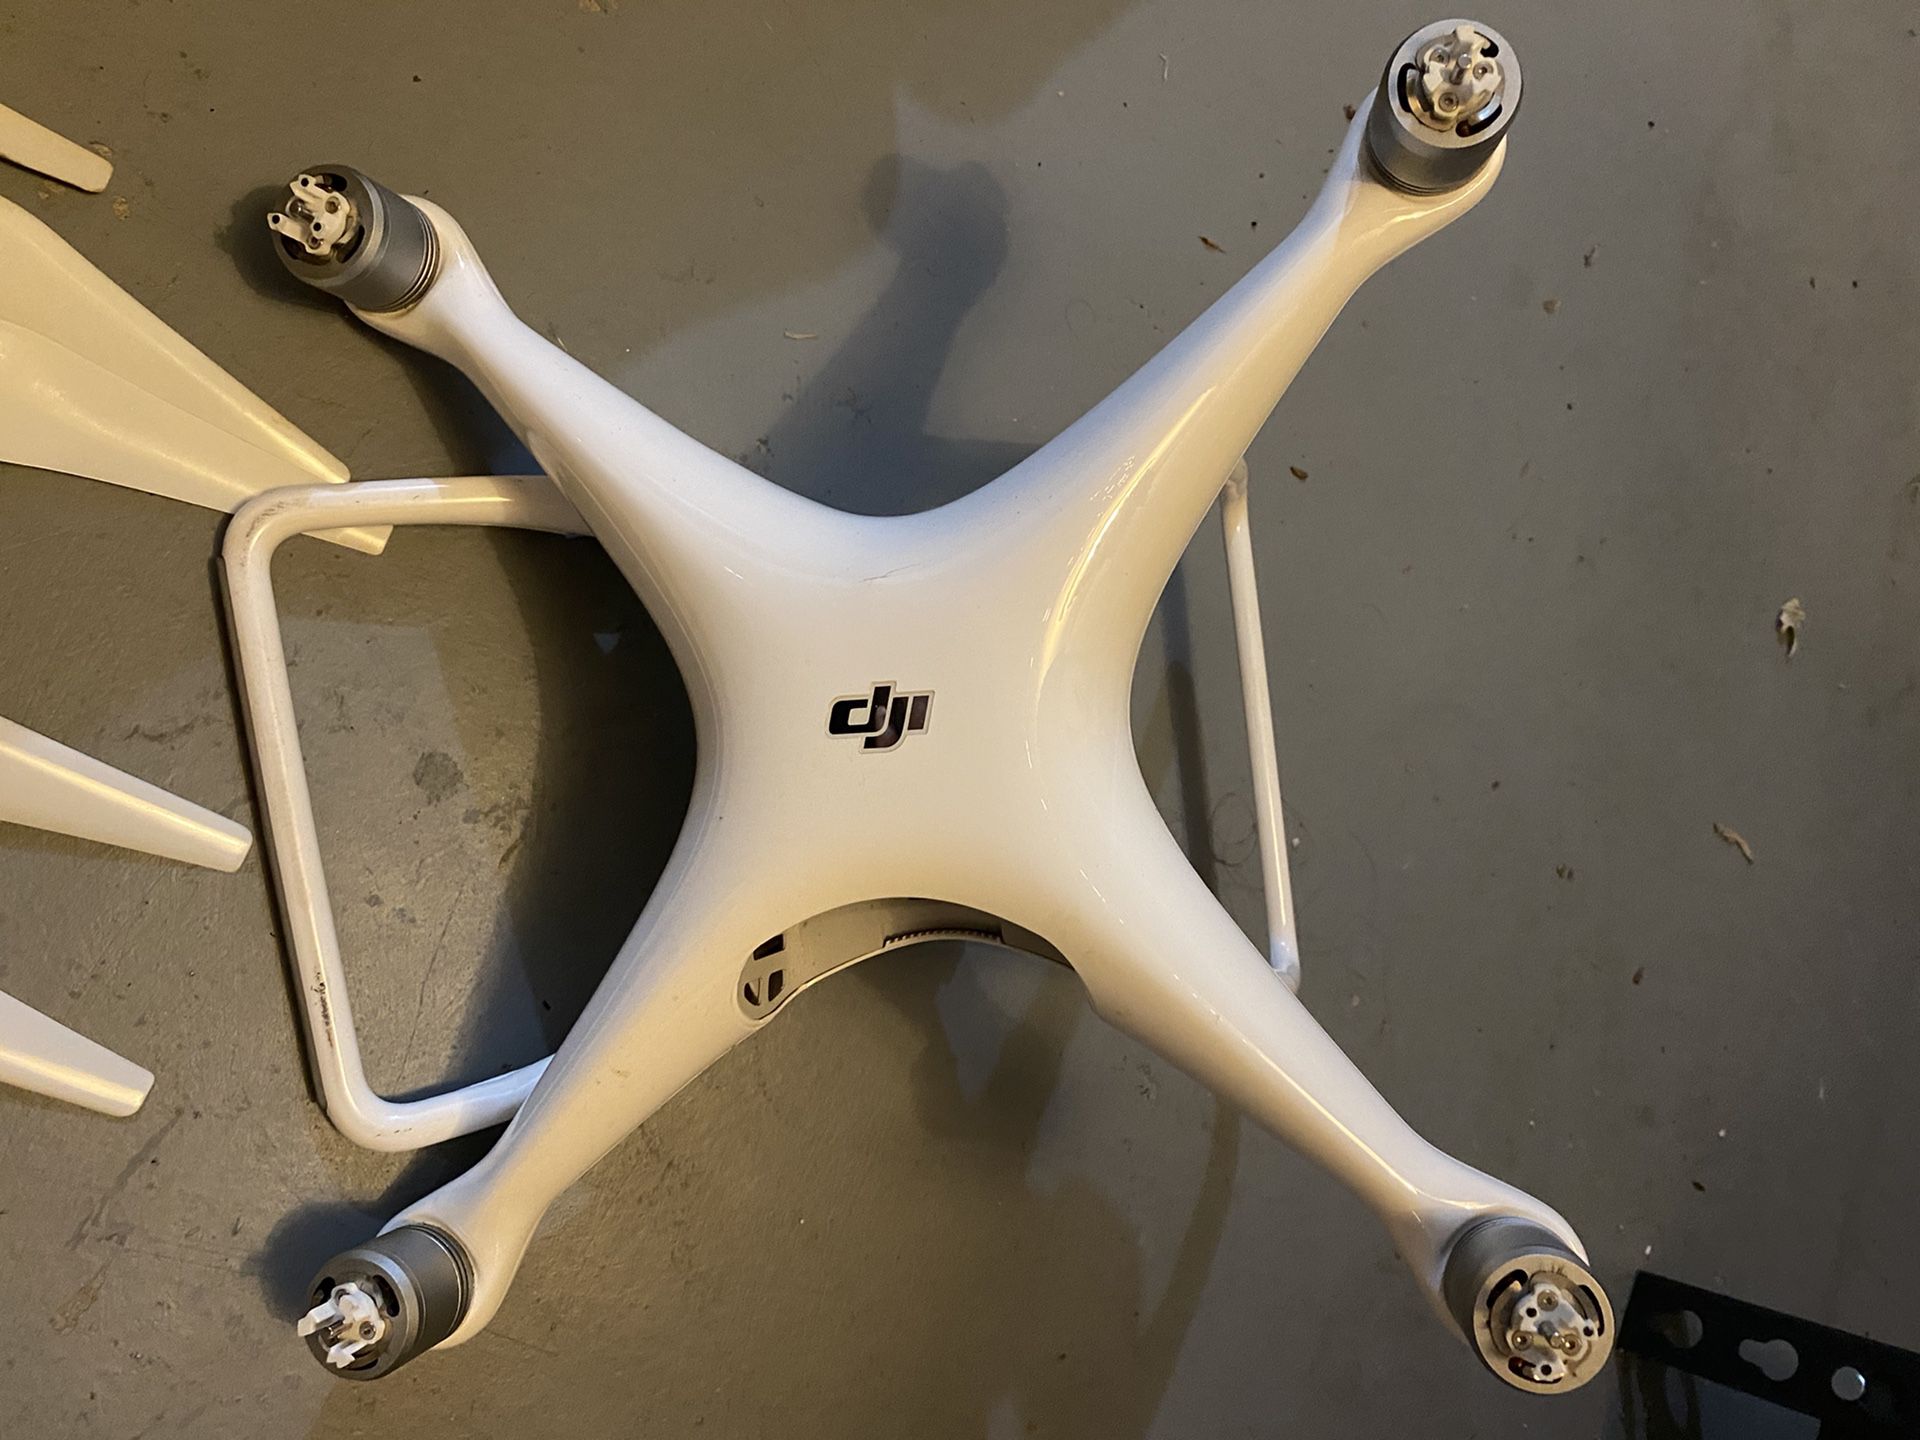 DJI Phantom 4 Drone and Accessories